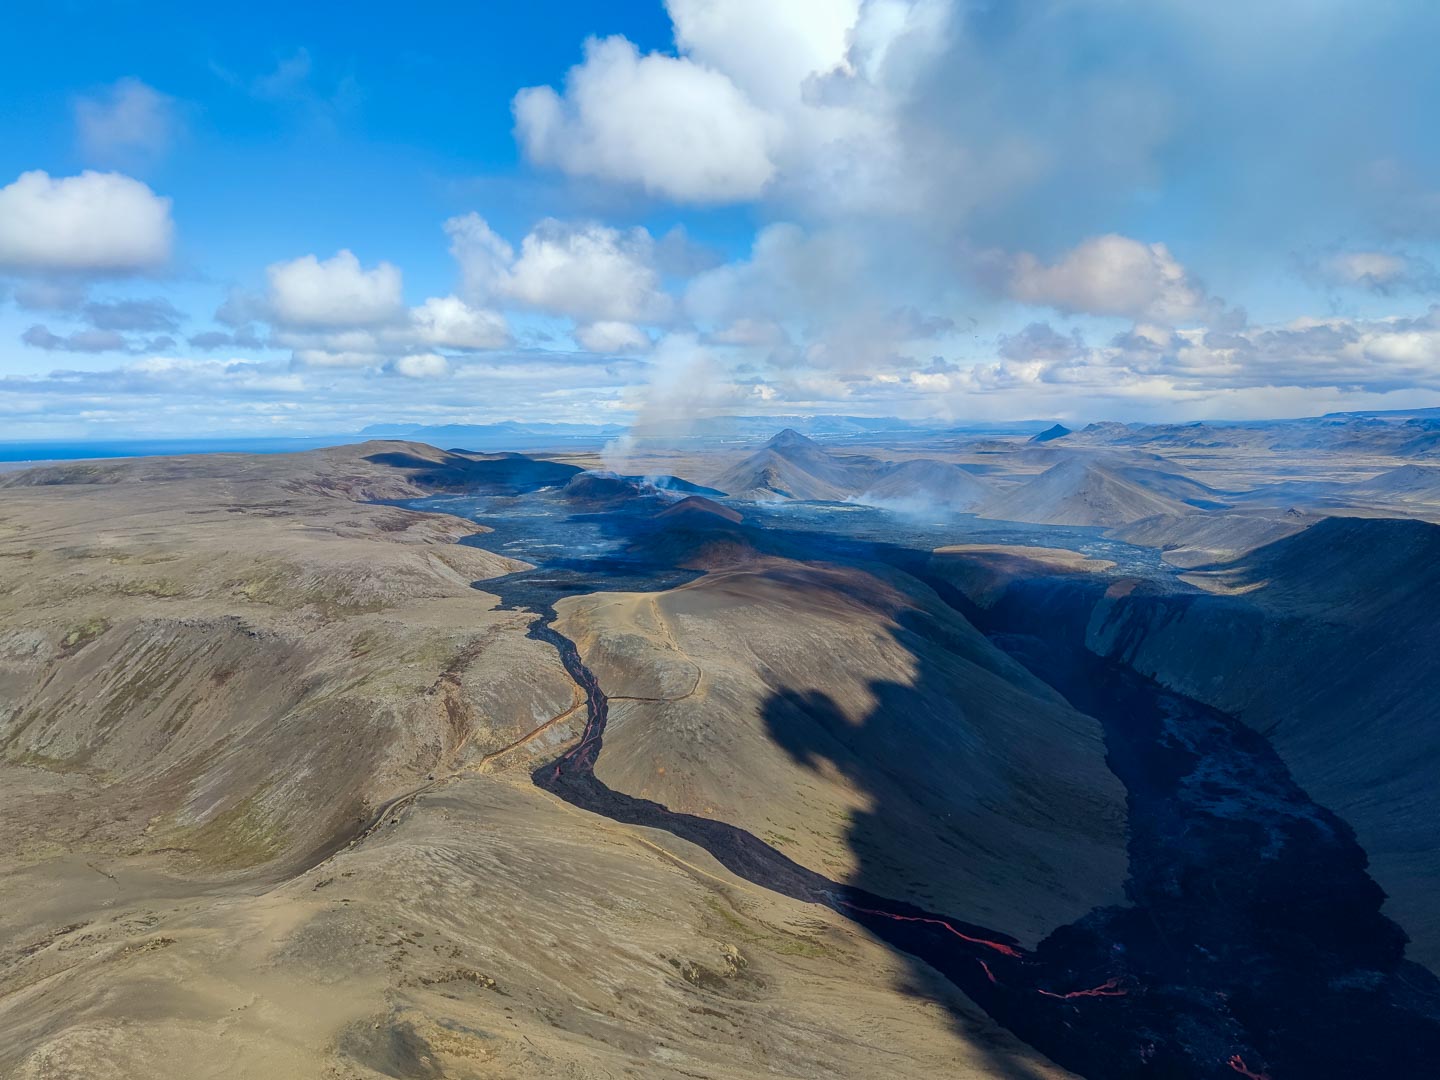 Overview of Fagradalsfjall / Geldingadalur active volcano eruption in Iceland